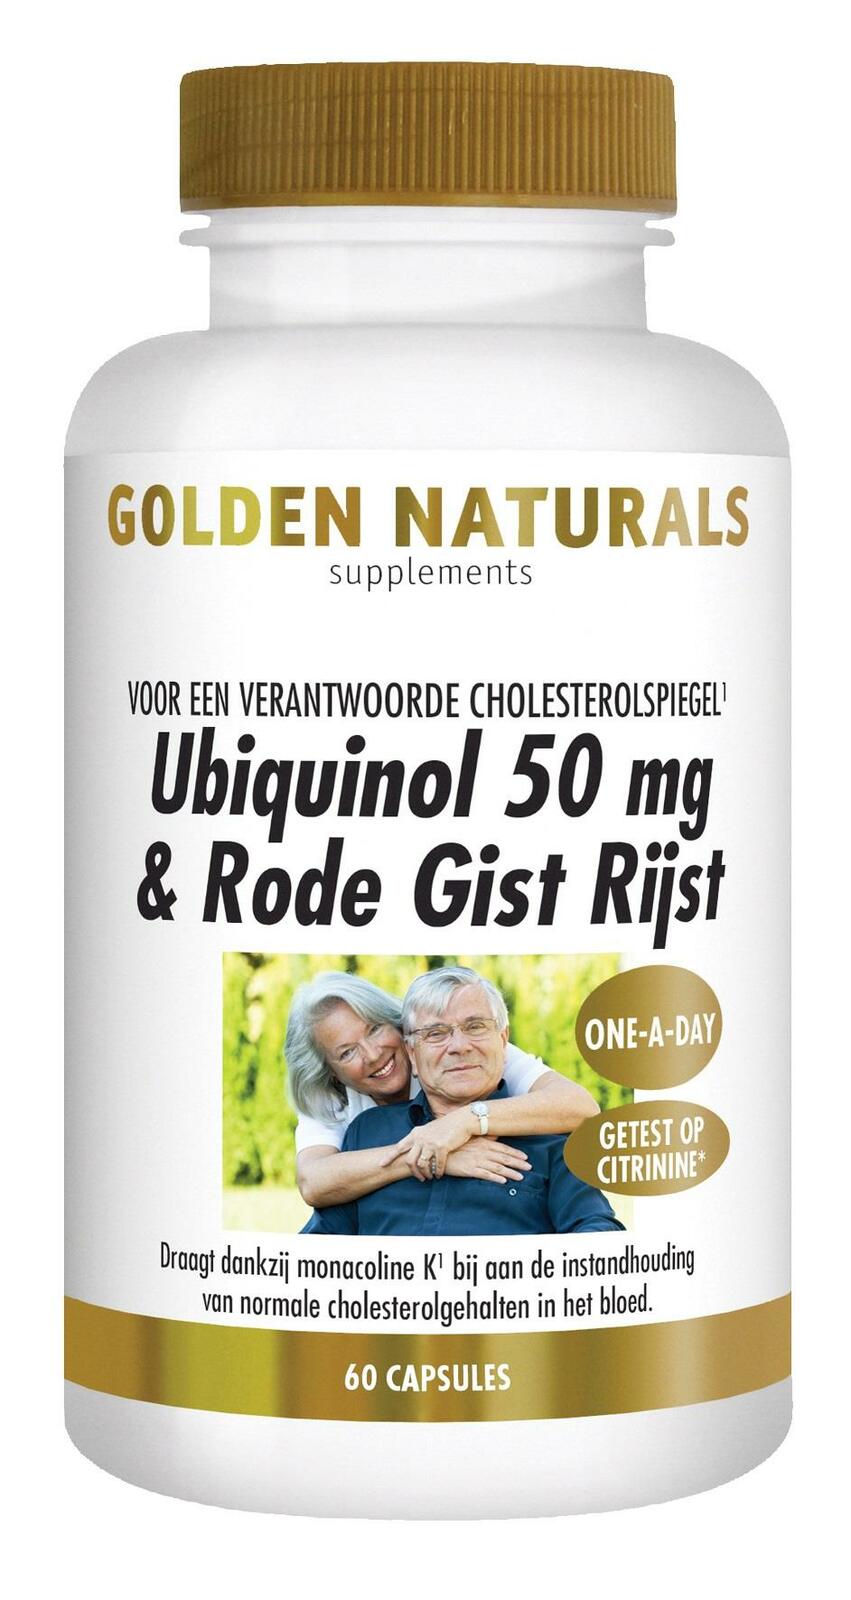 Golden Naturals Ubiquinol 50mg & Rode Gist Rijst Capsules